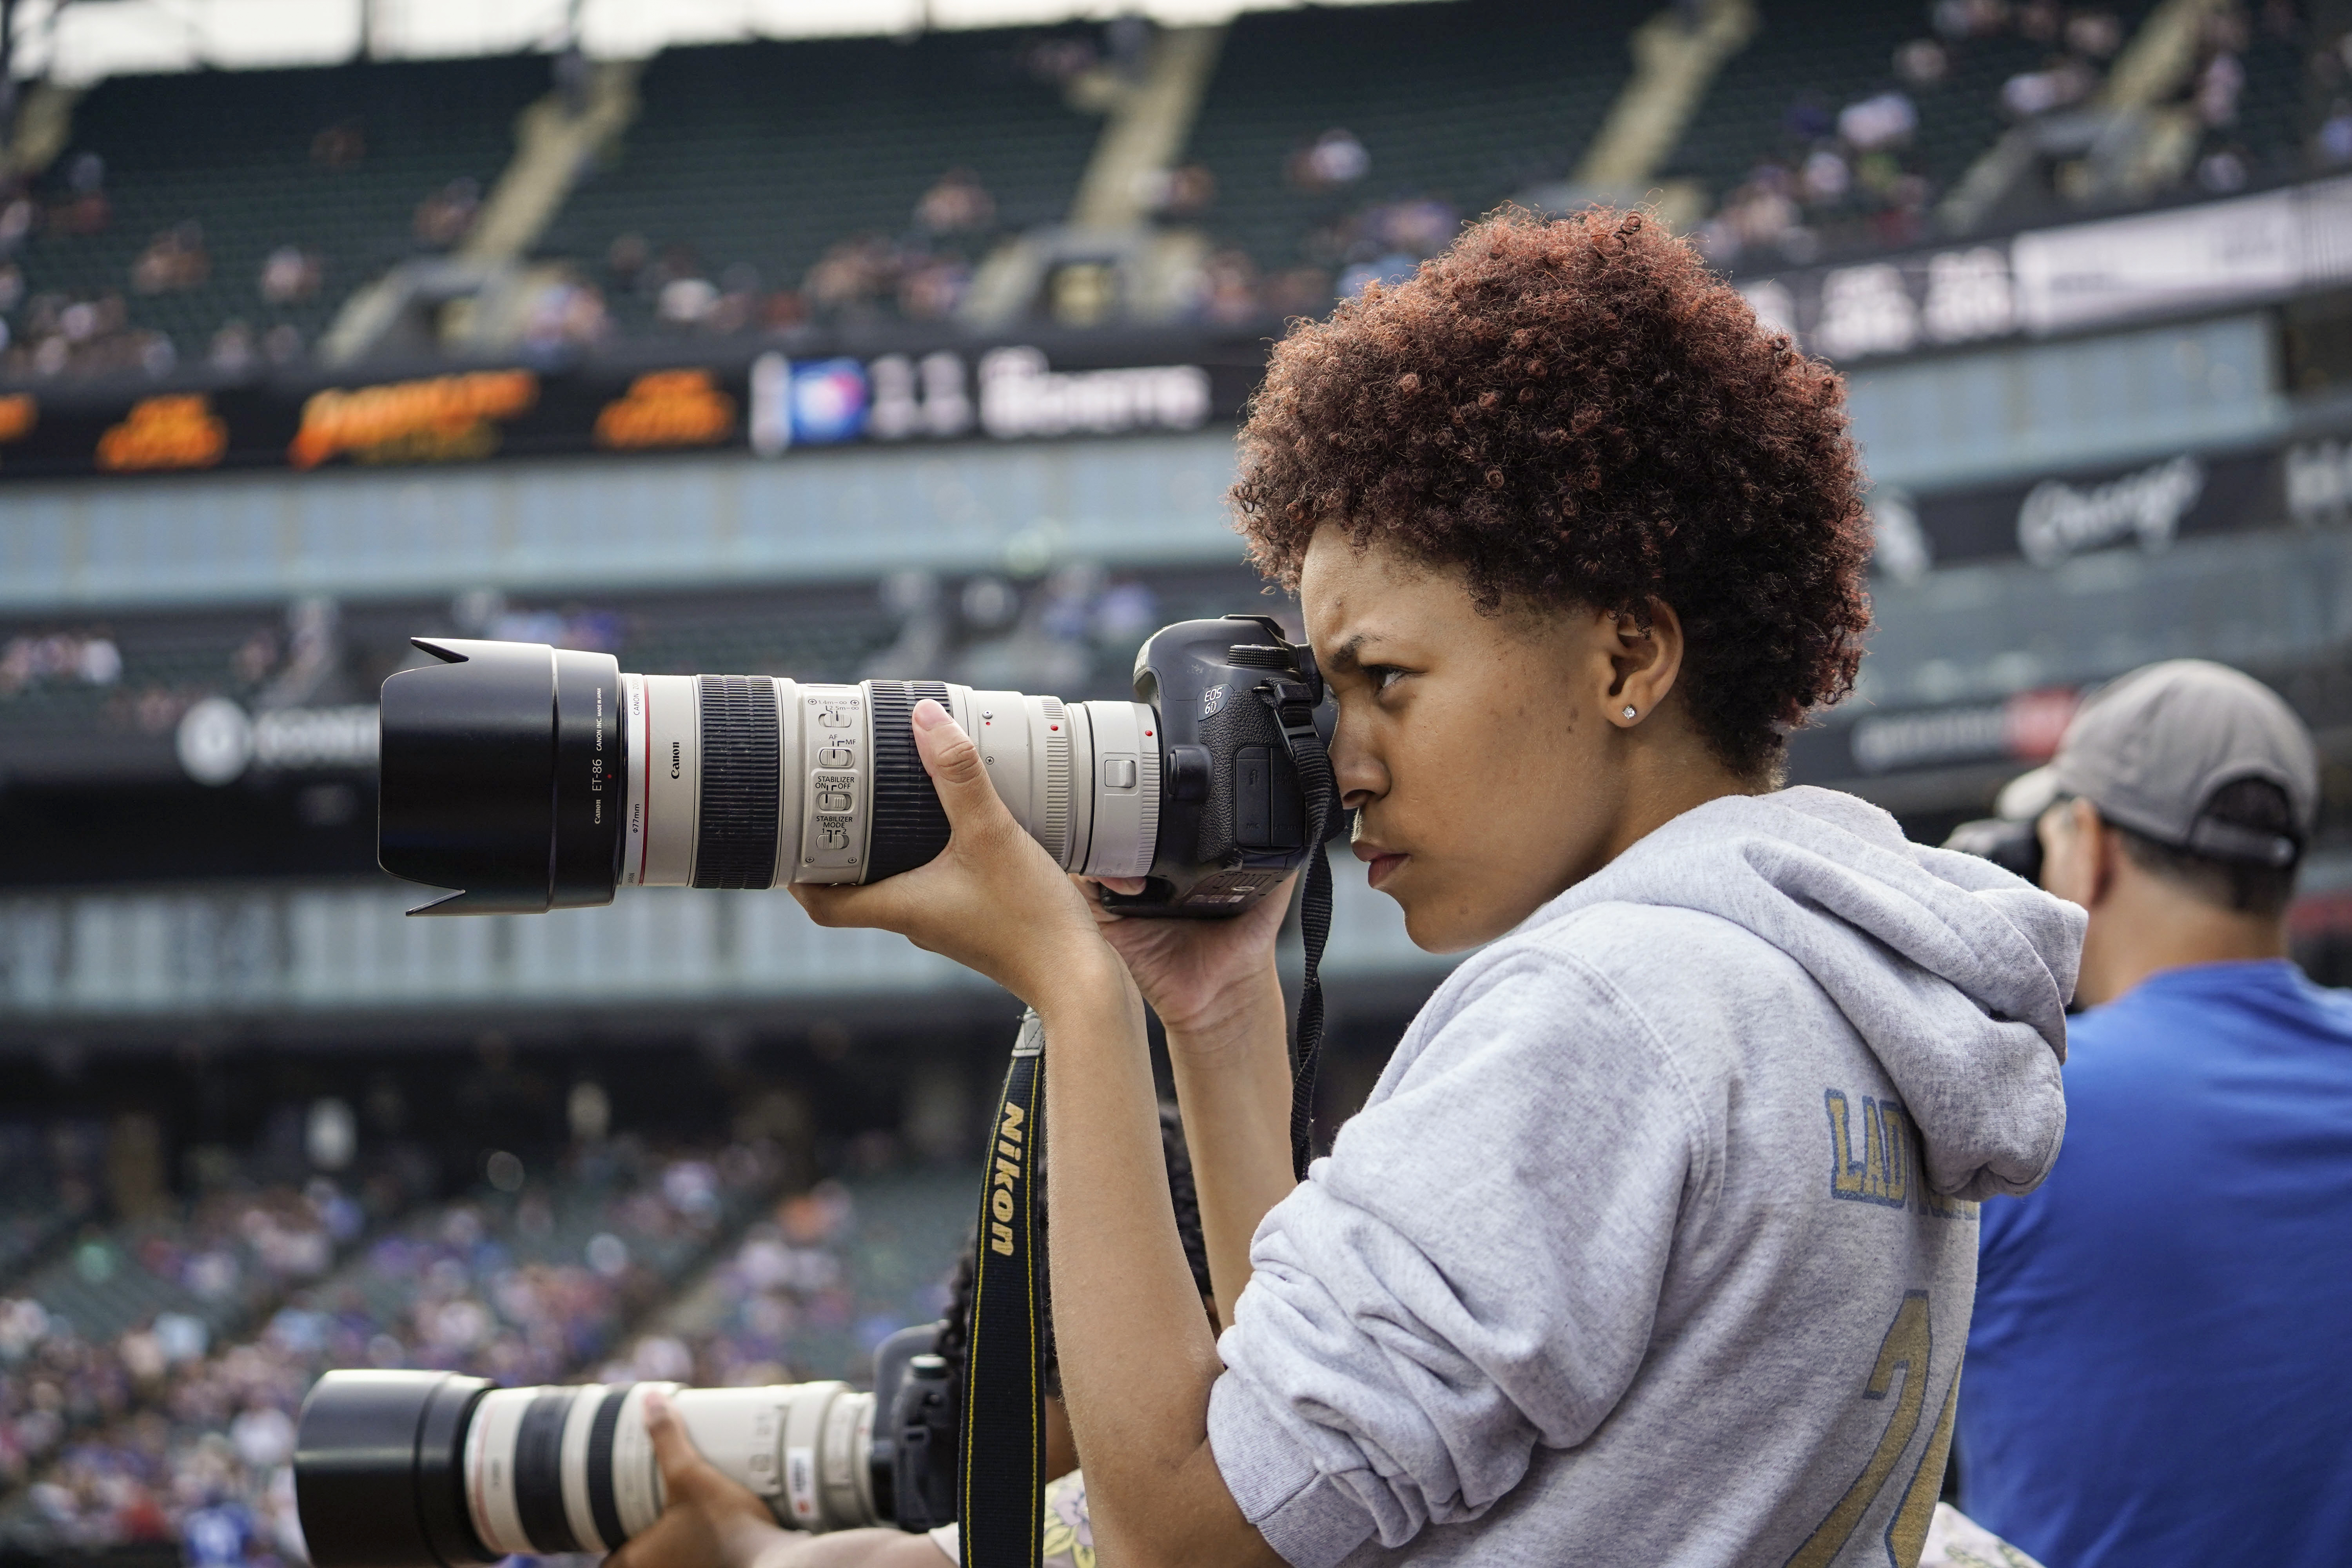 Young photographer takes photos at baseball game